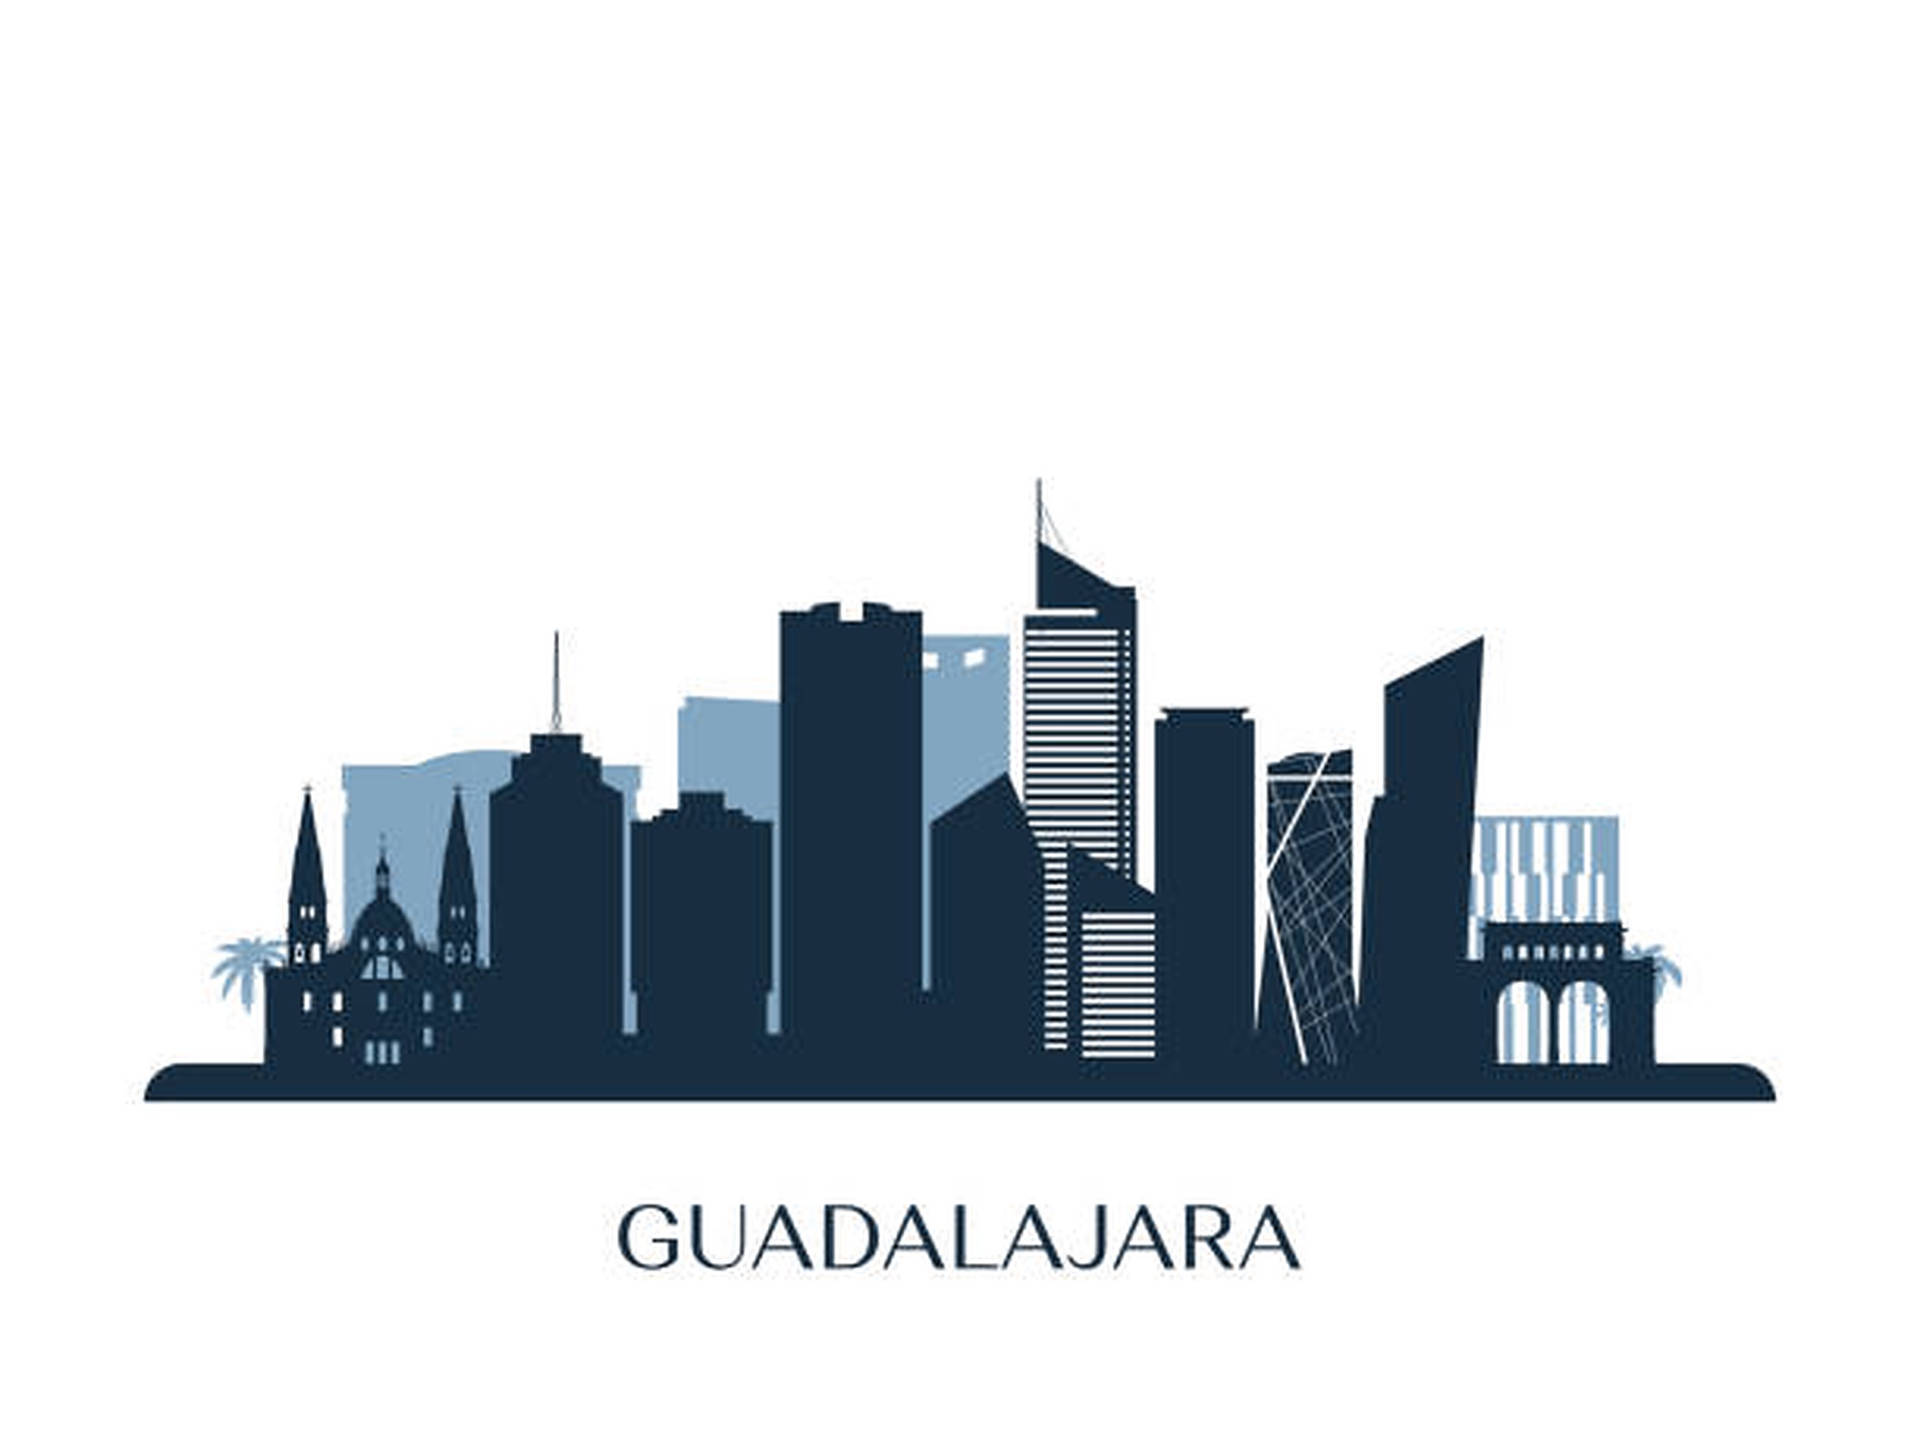 Guadalajara monochromatic silhouette wallpaper